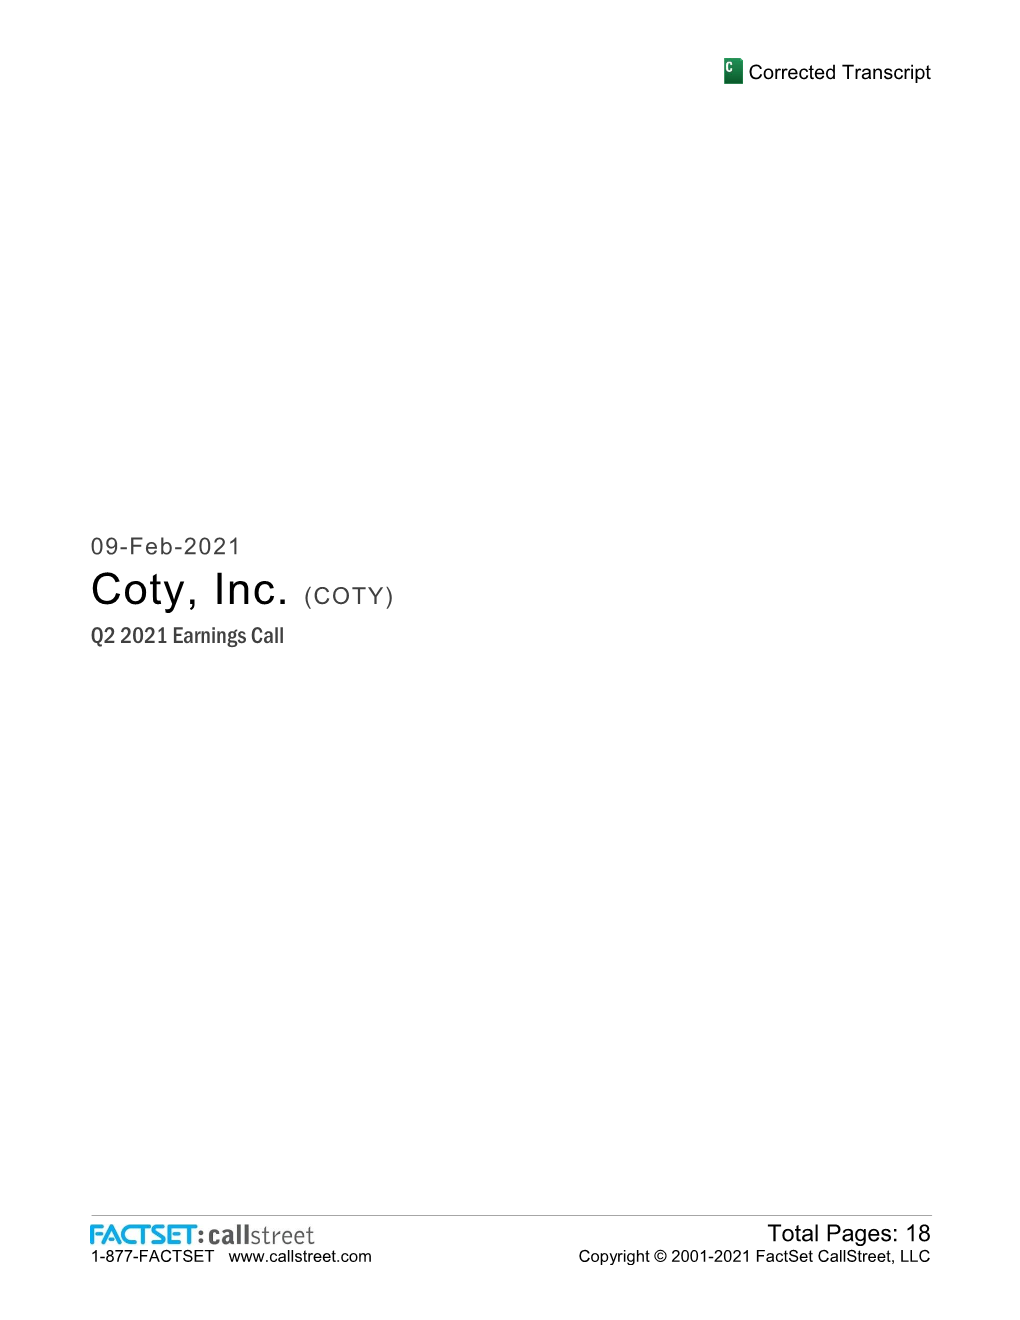 Coty, Inc. (COTY) Q2 2021 Earnings Call